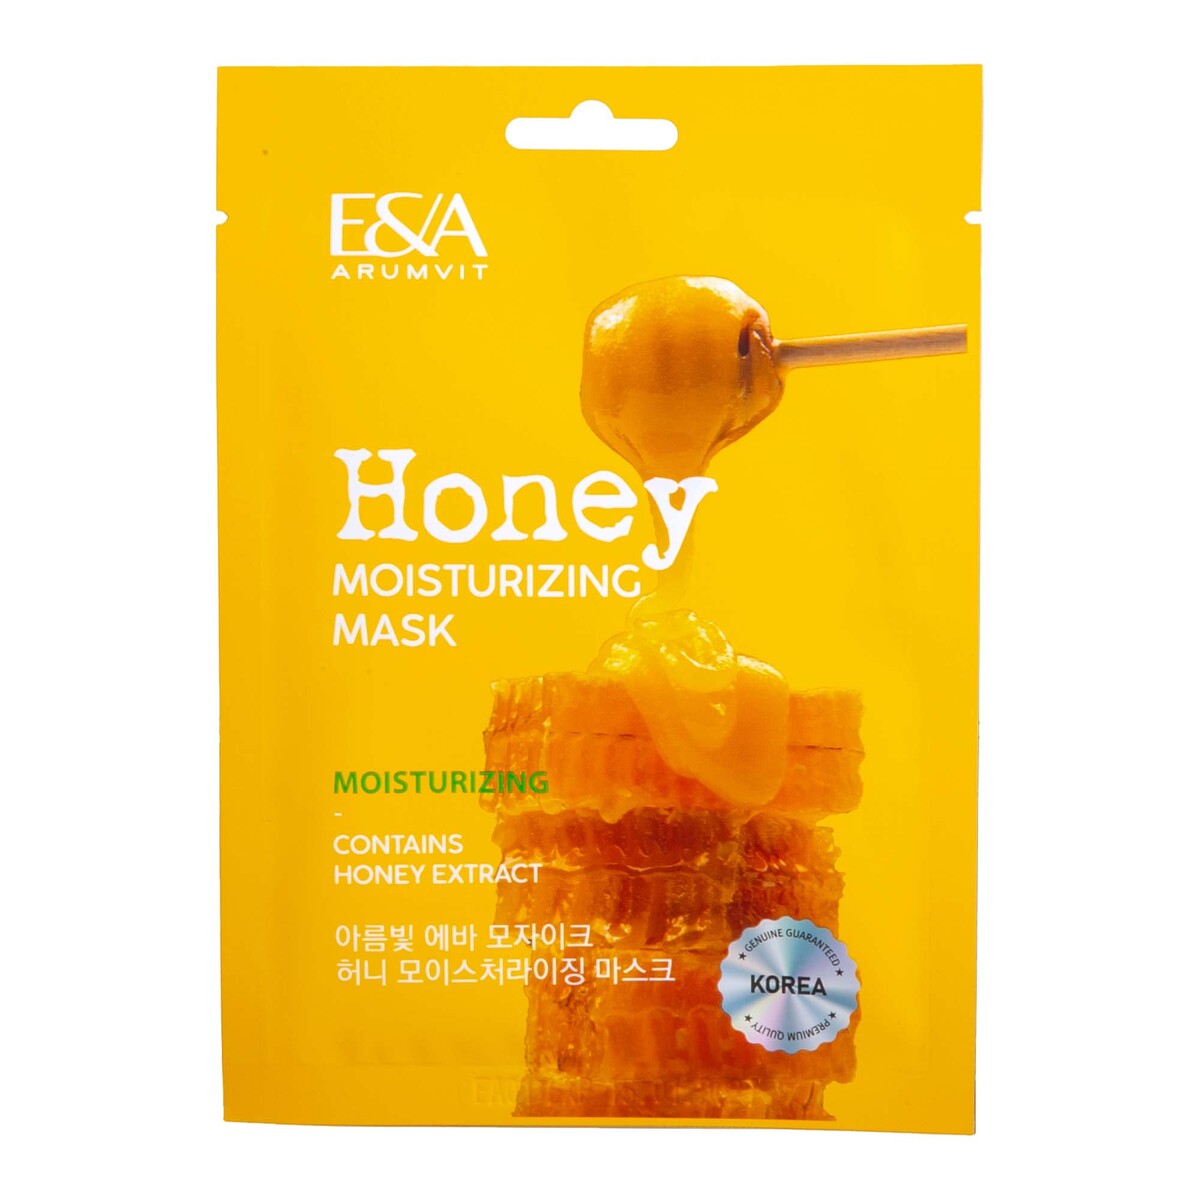 Arumvit Eva Mosaic Honey Moisturizing Mask, 25 g